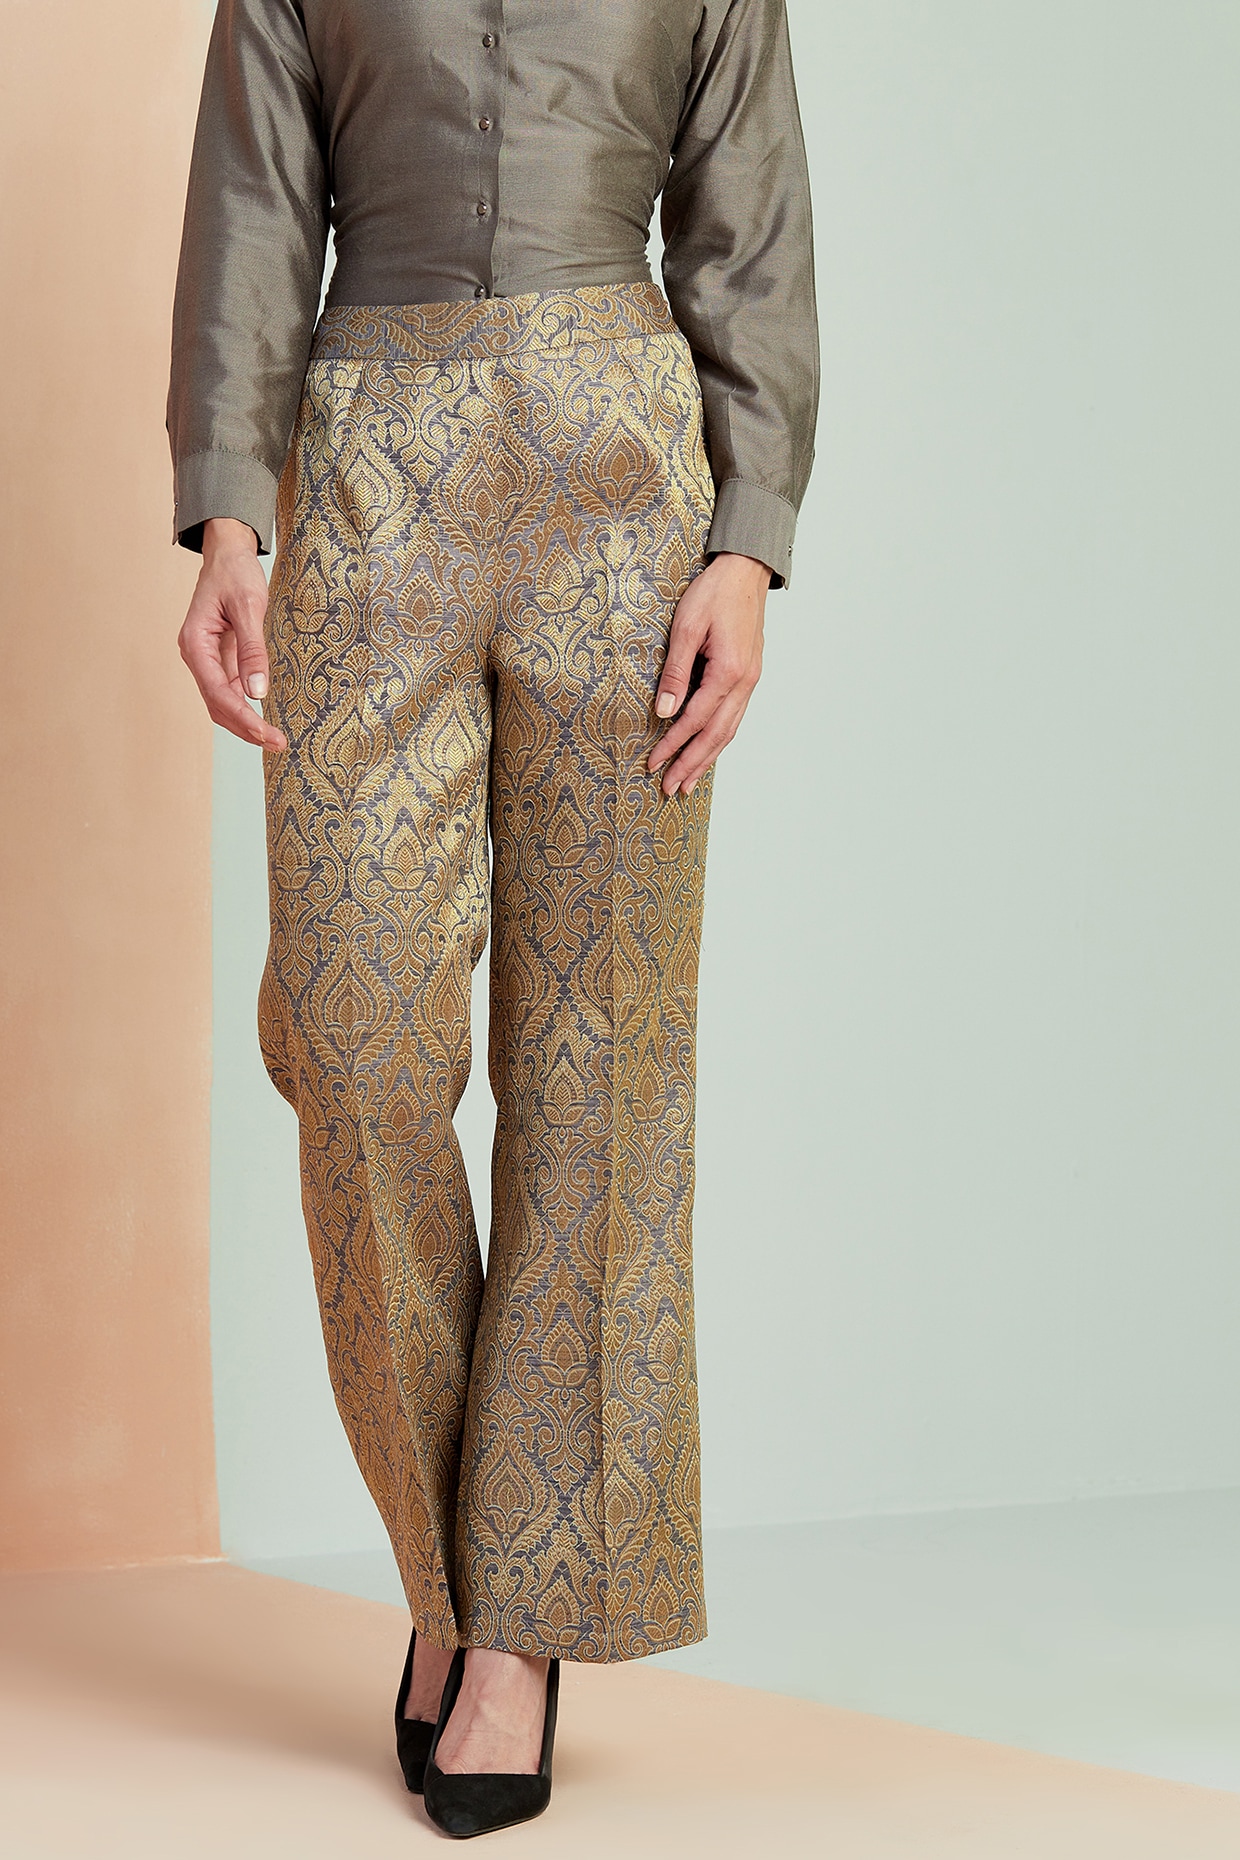 Buy NICE WONDER Women's Regular Fit Silk Gold Border Pants/Trousers Present  (28, Golden) at Amazon.in